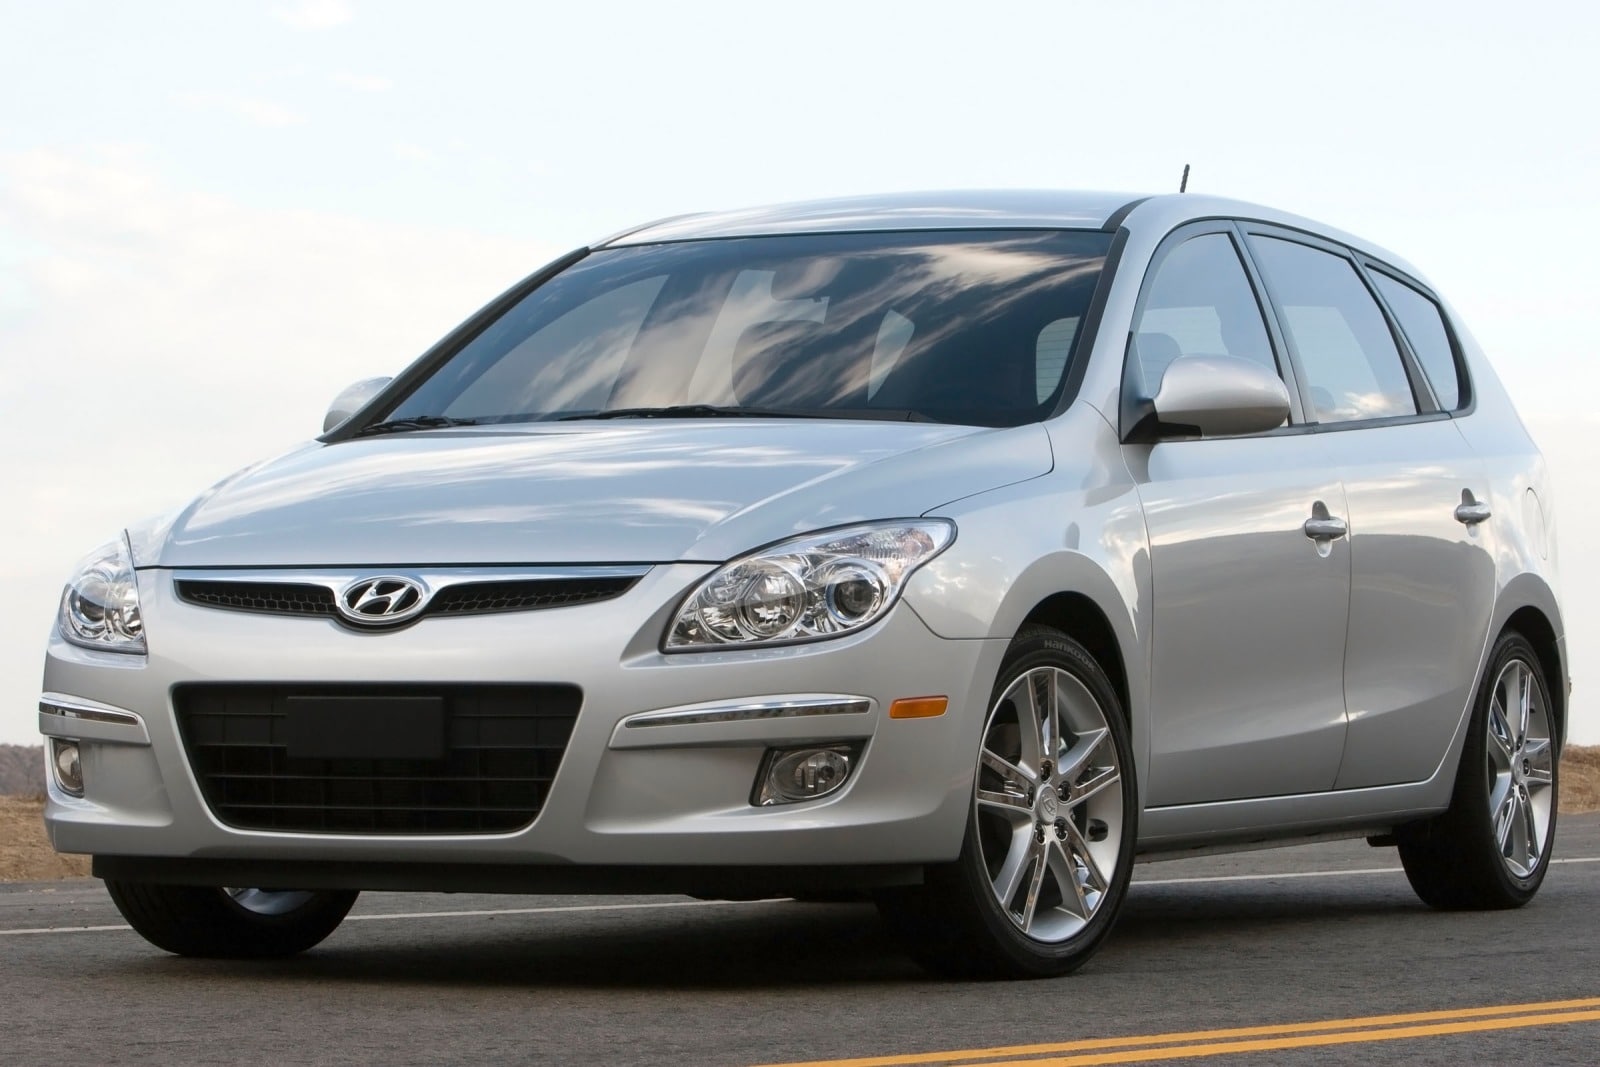 2012 Hyundai Elantra Touring Review & Ratings | Edmunds